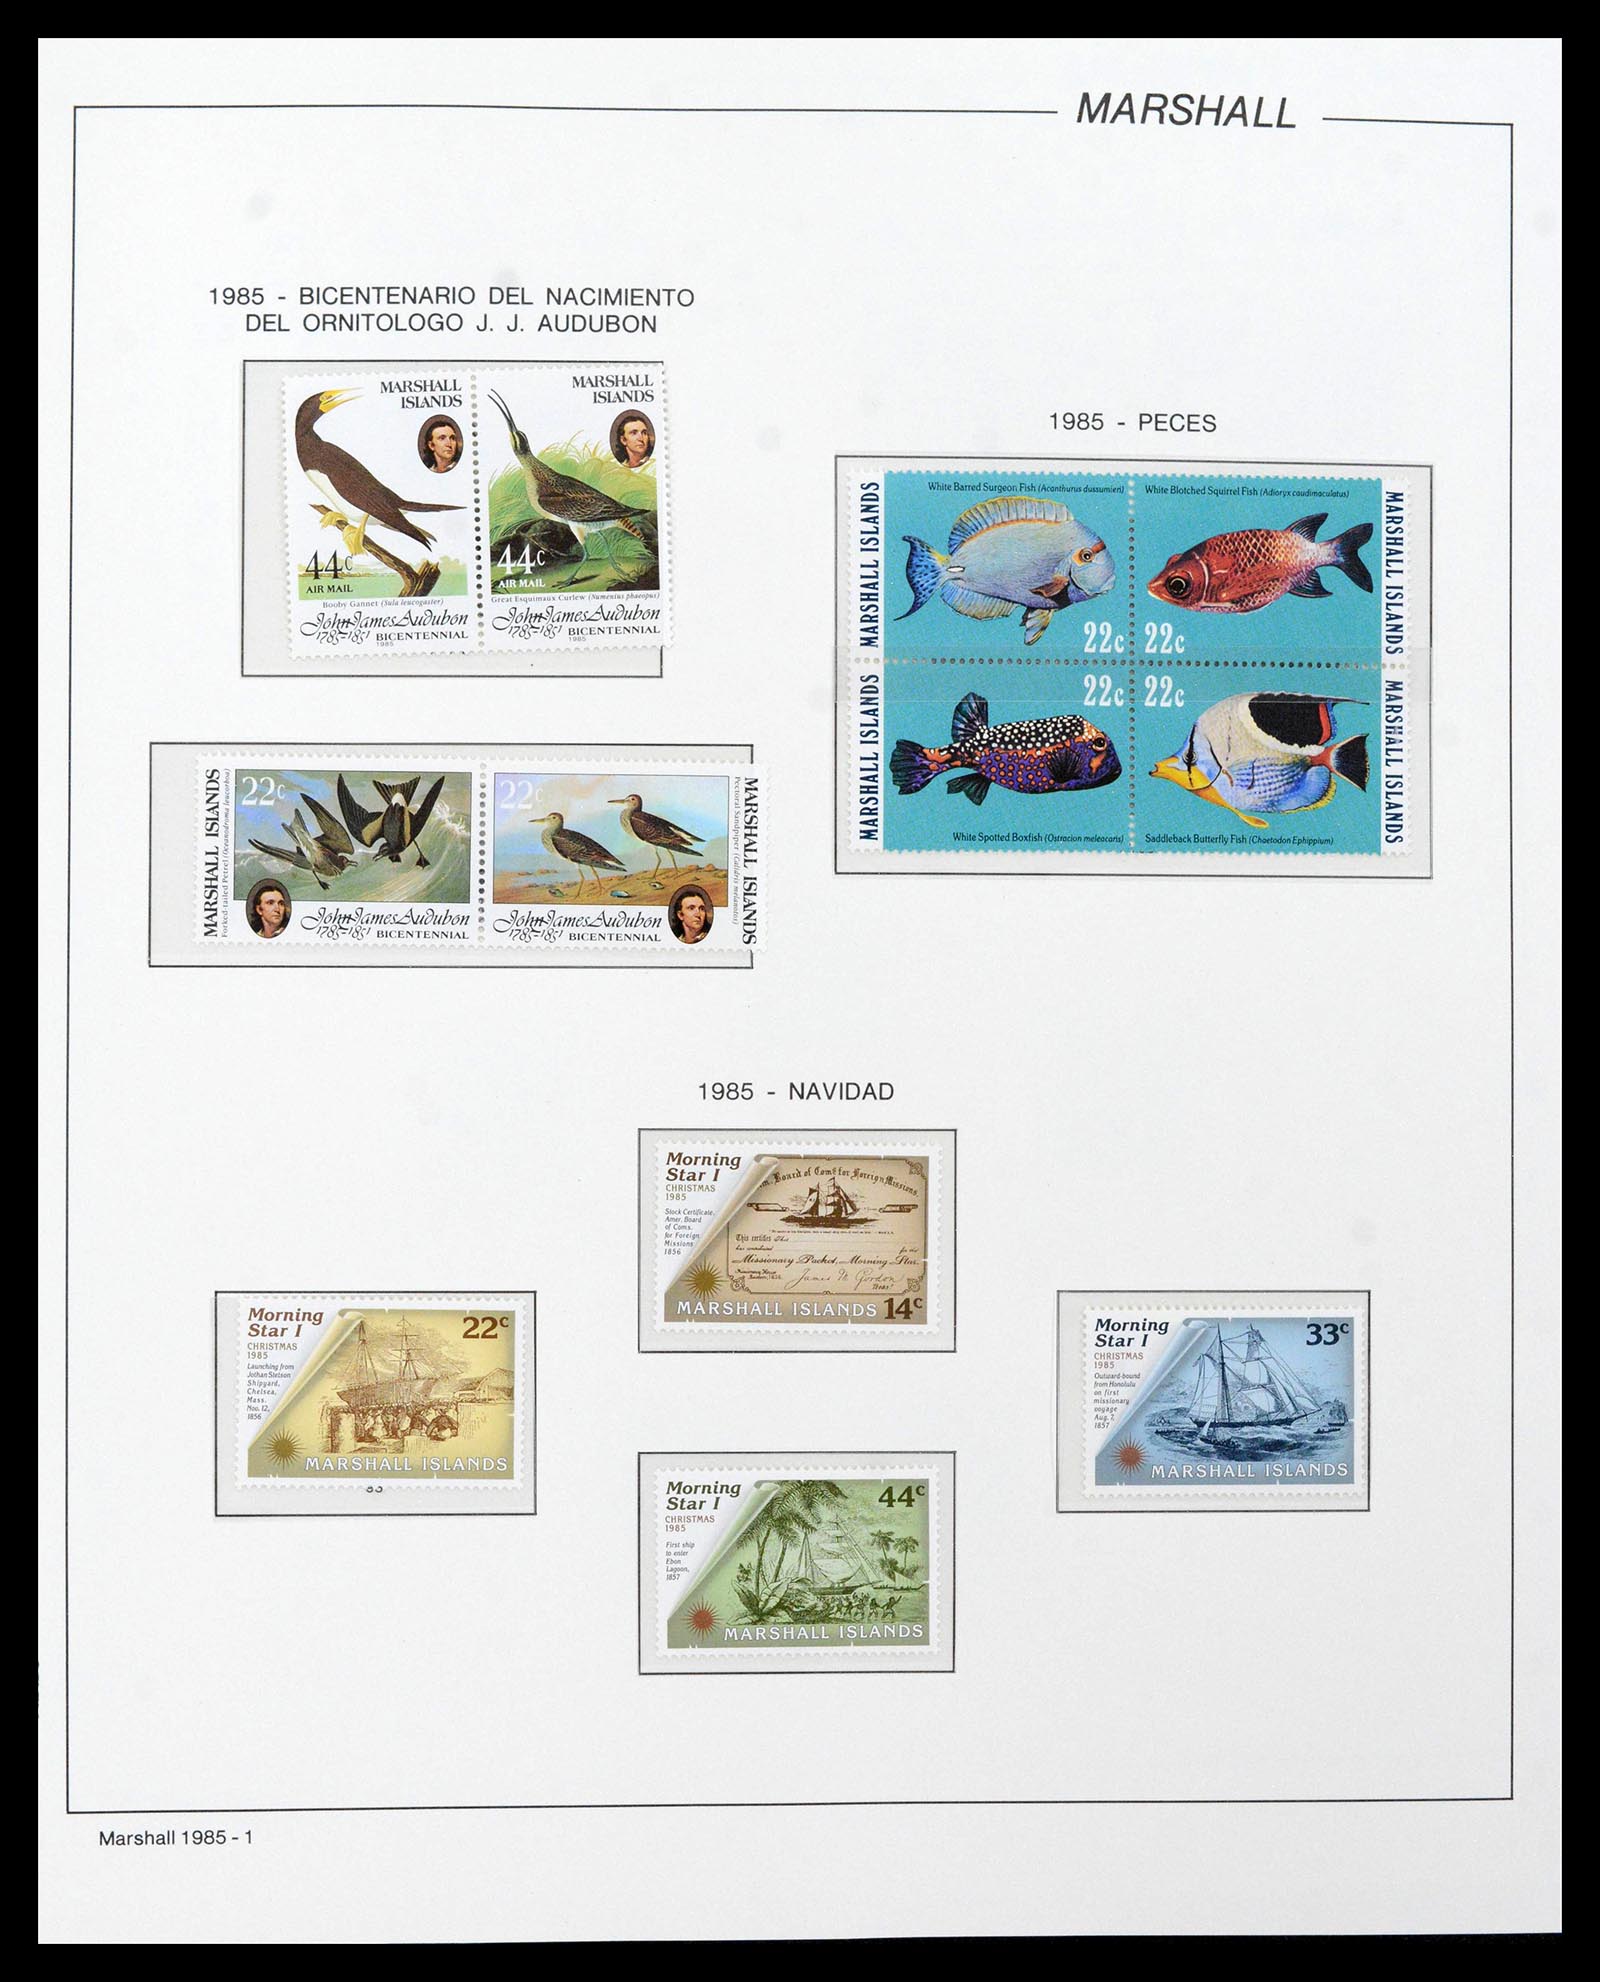 39222 0115 - Stamp collection 39222 Palau, Micronesia and Marshall islands 1980-1995.